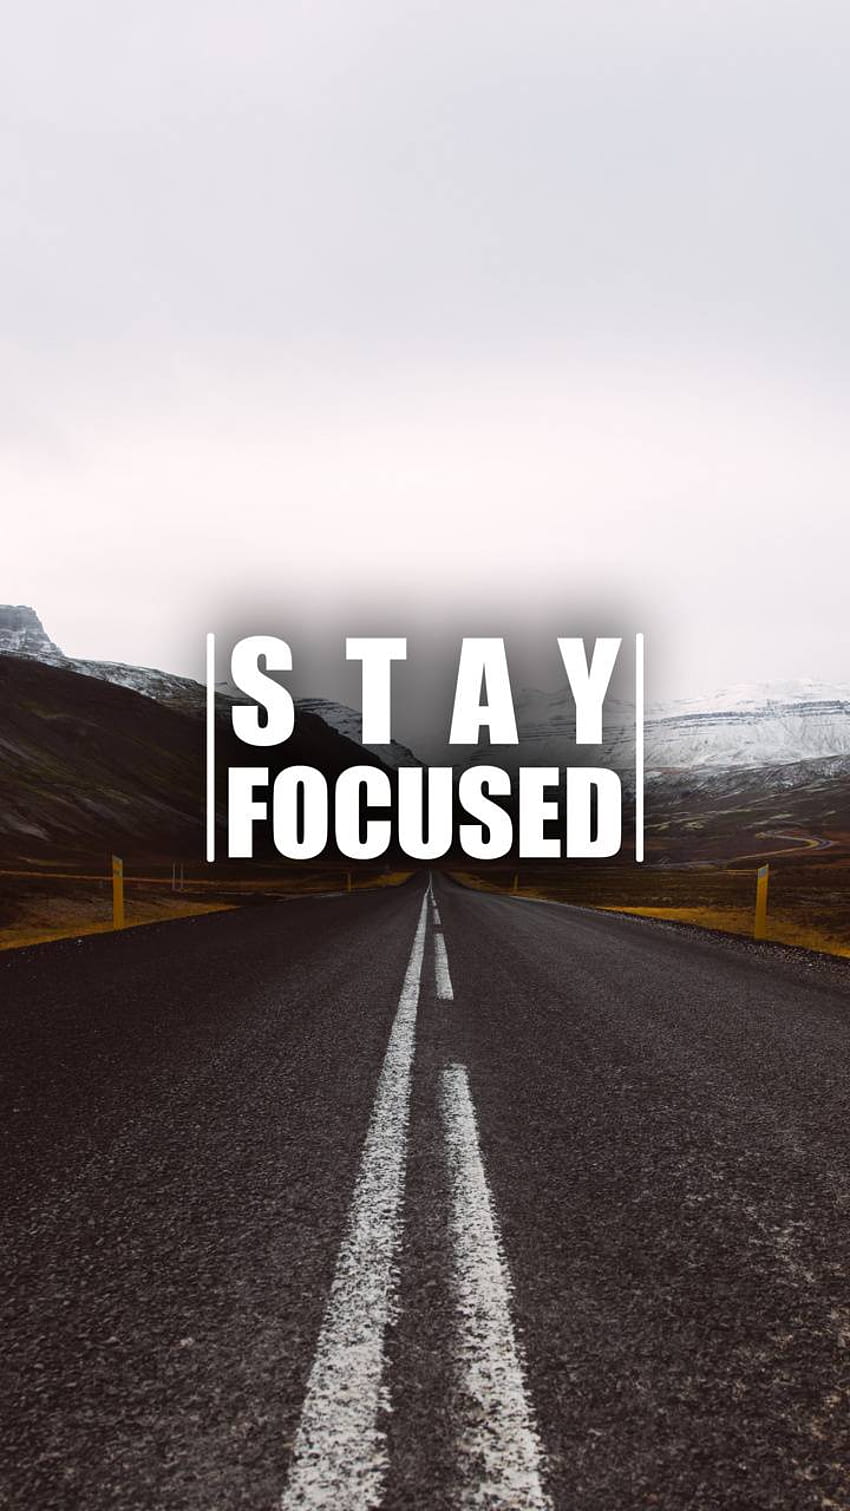 Stay Focused 8 wallpaper by deyanpeychev  Download on ZEDGE  42f6